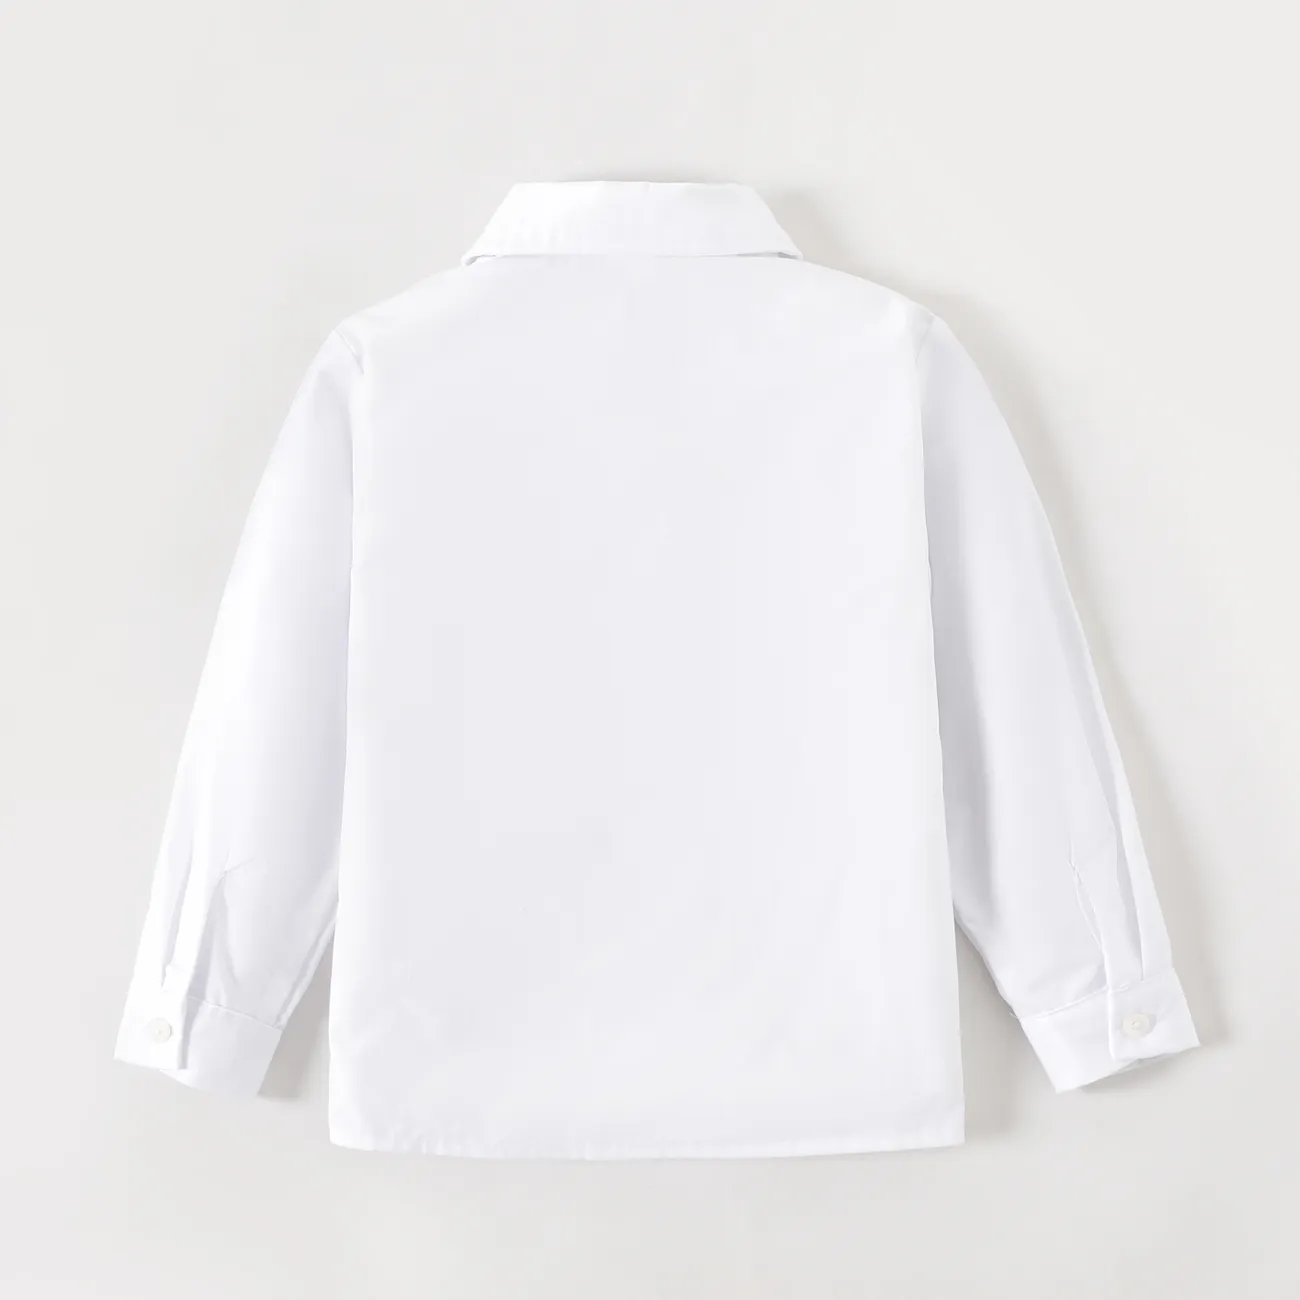 Toddler Boy/Girl School Uniform Long-sleeve Solid Shirt White big image 1